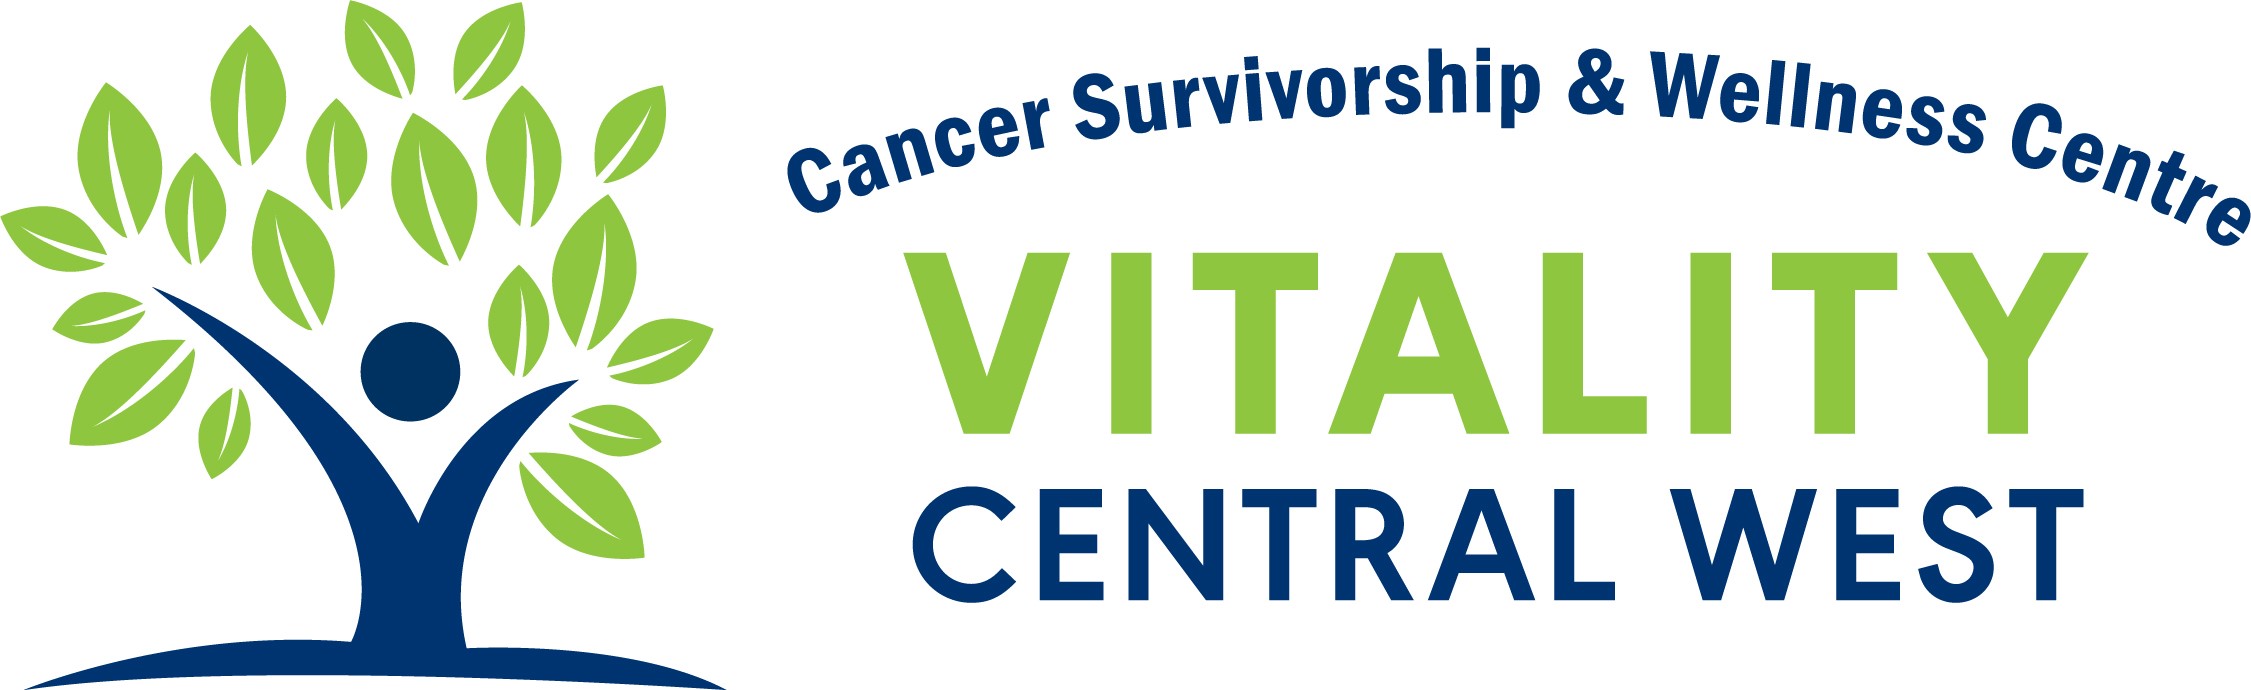 Vitality Central West Cancer Survivorship and Wellness Centre logo